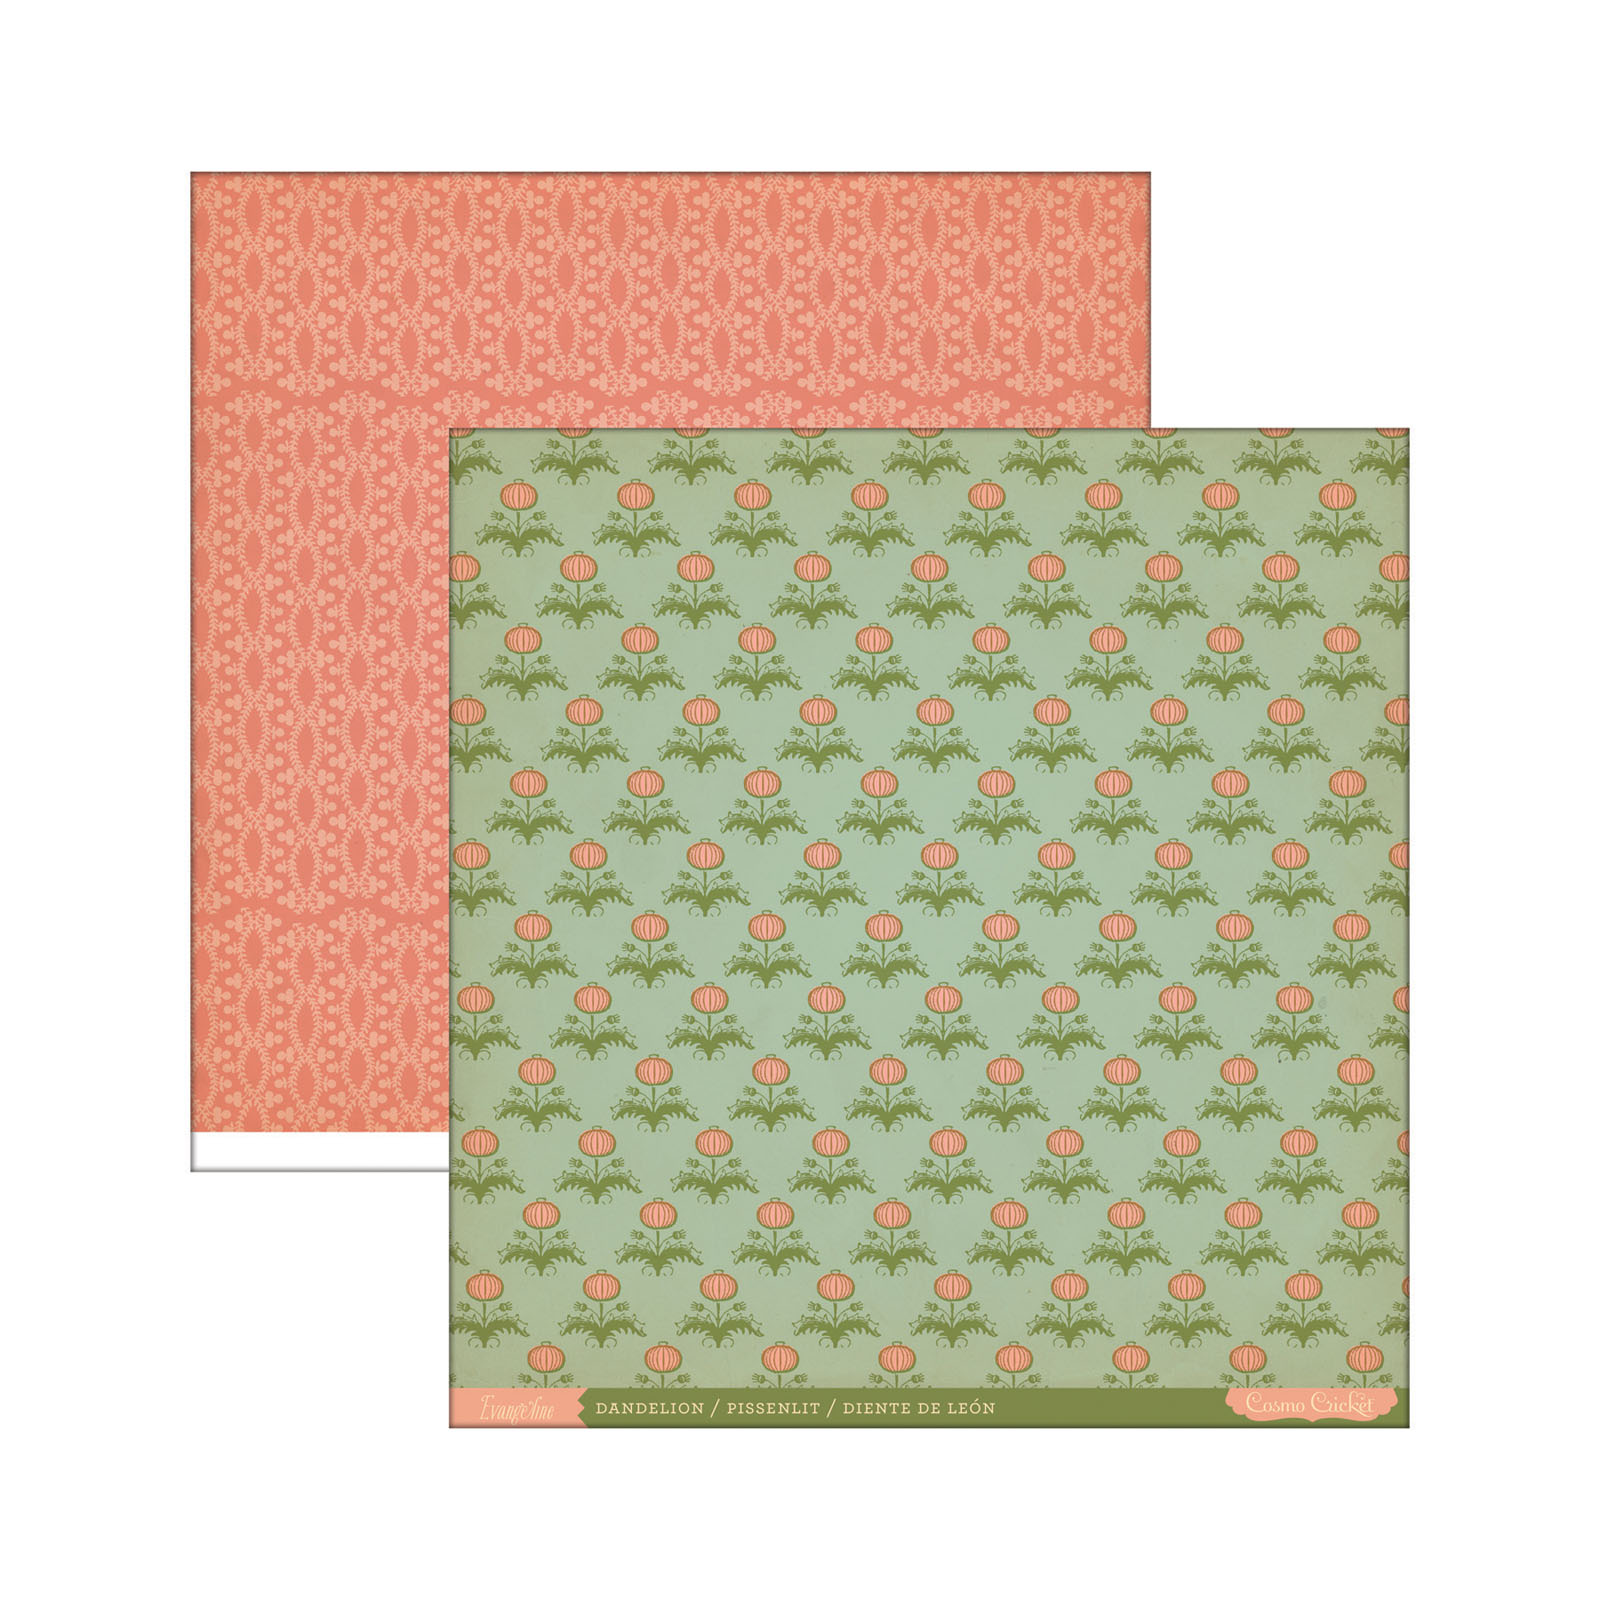 Cosmo cricket • Evangeline paper 30,5x30,5cm Dandelion